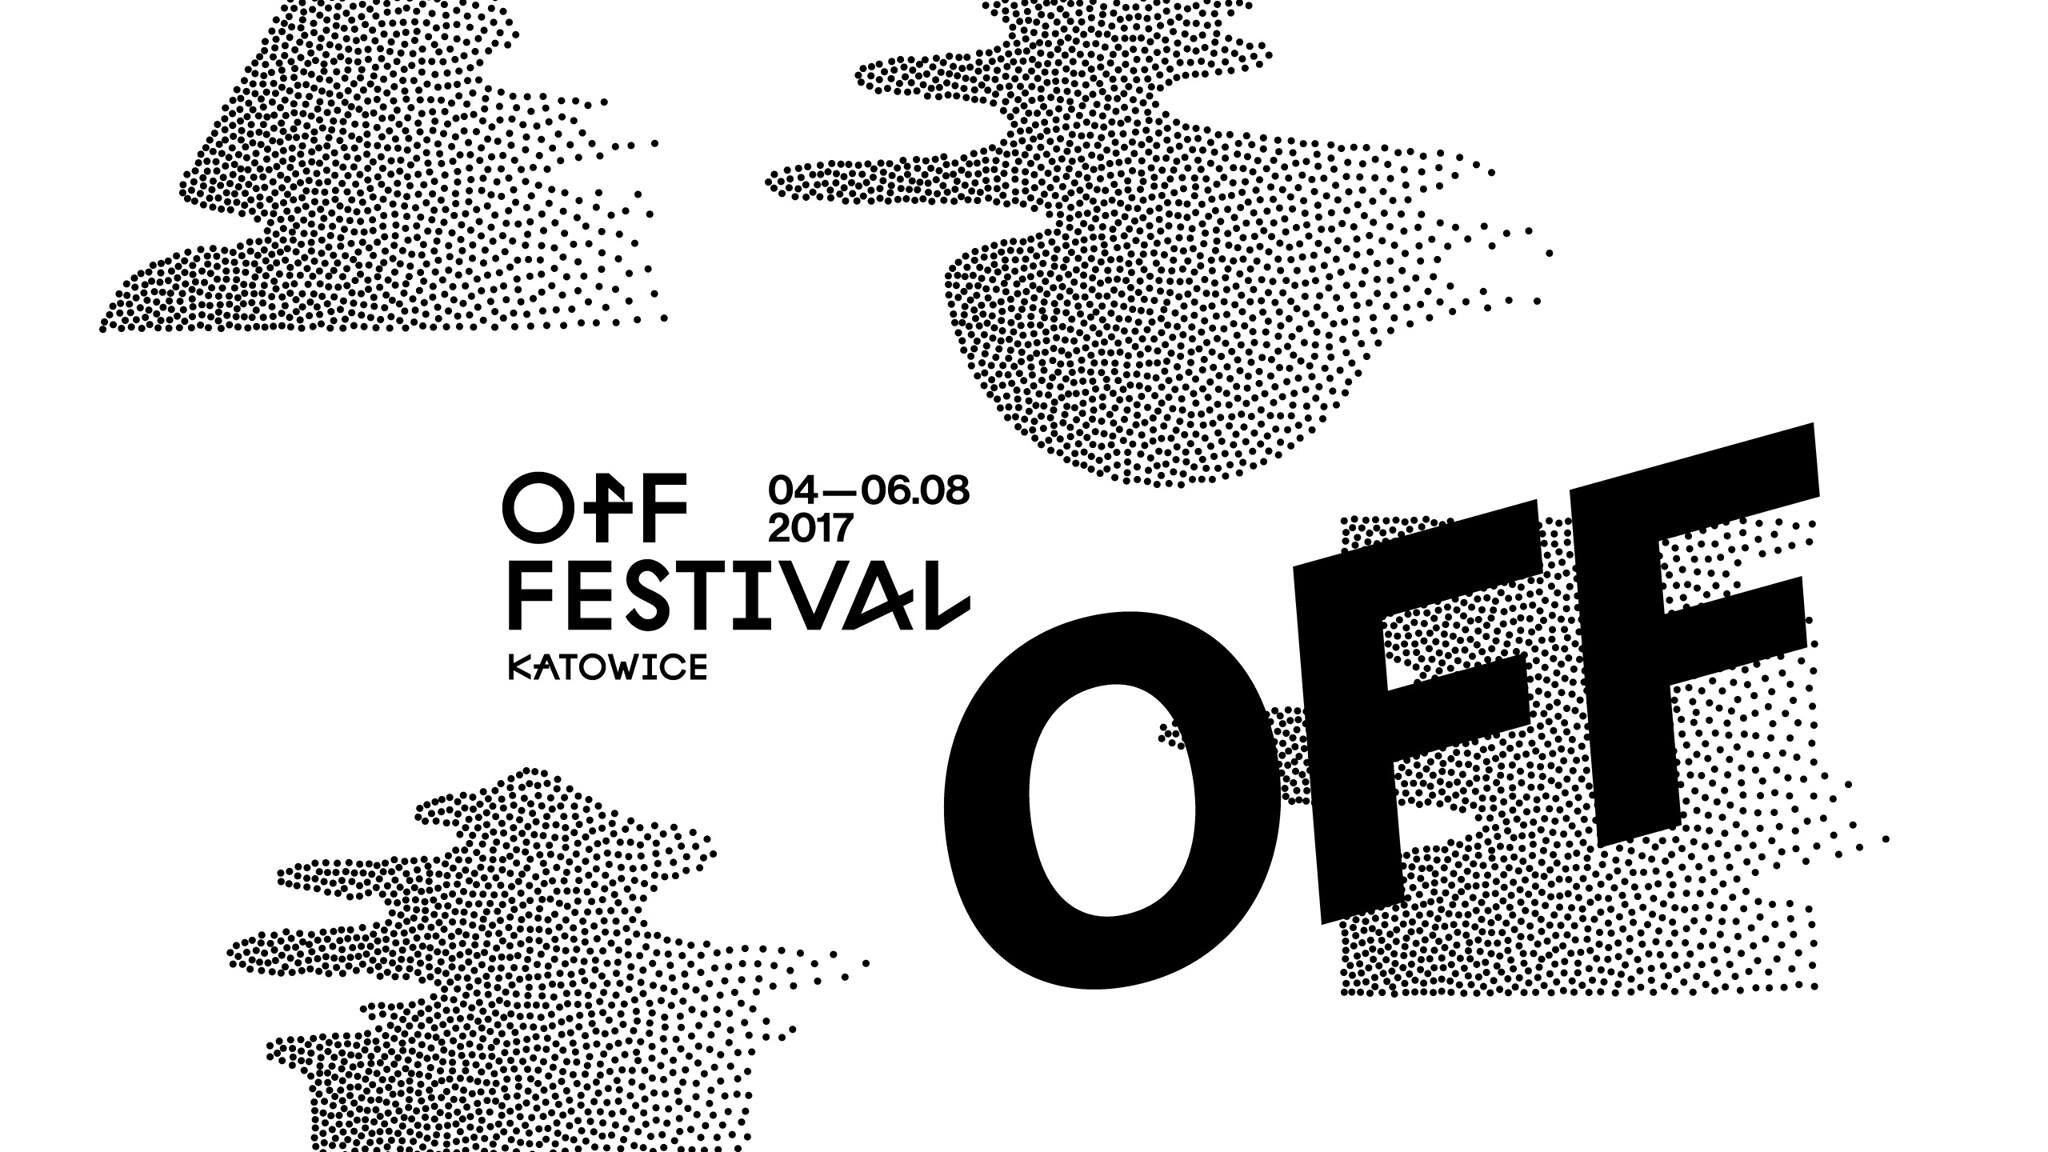 OFF Festival Katowice 04-06.08. 2017